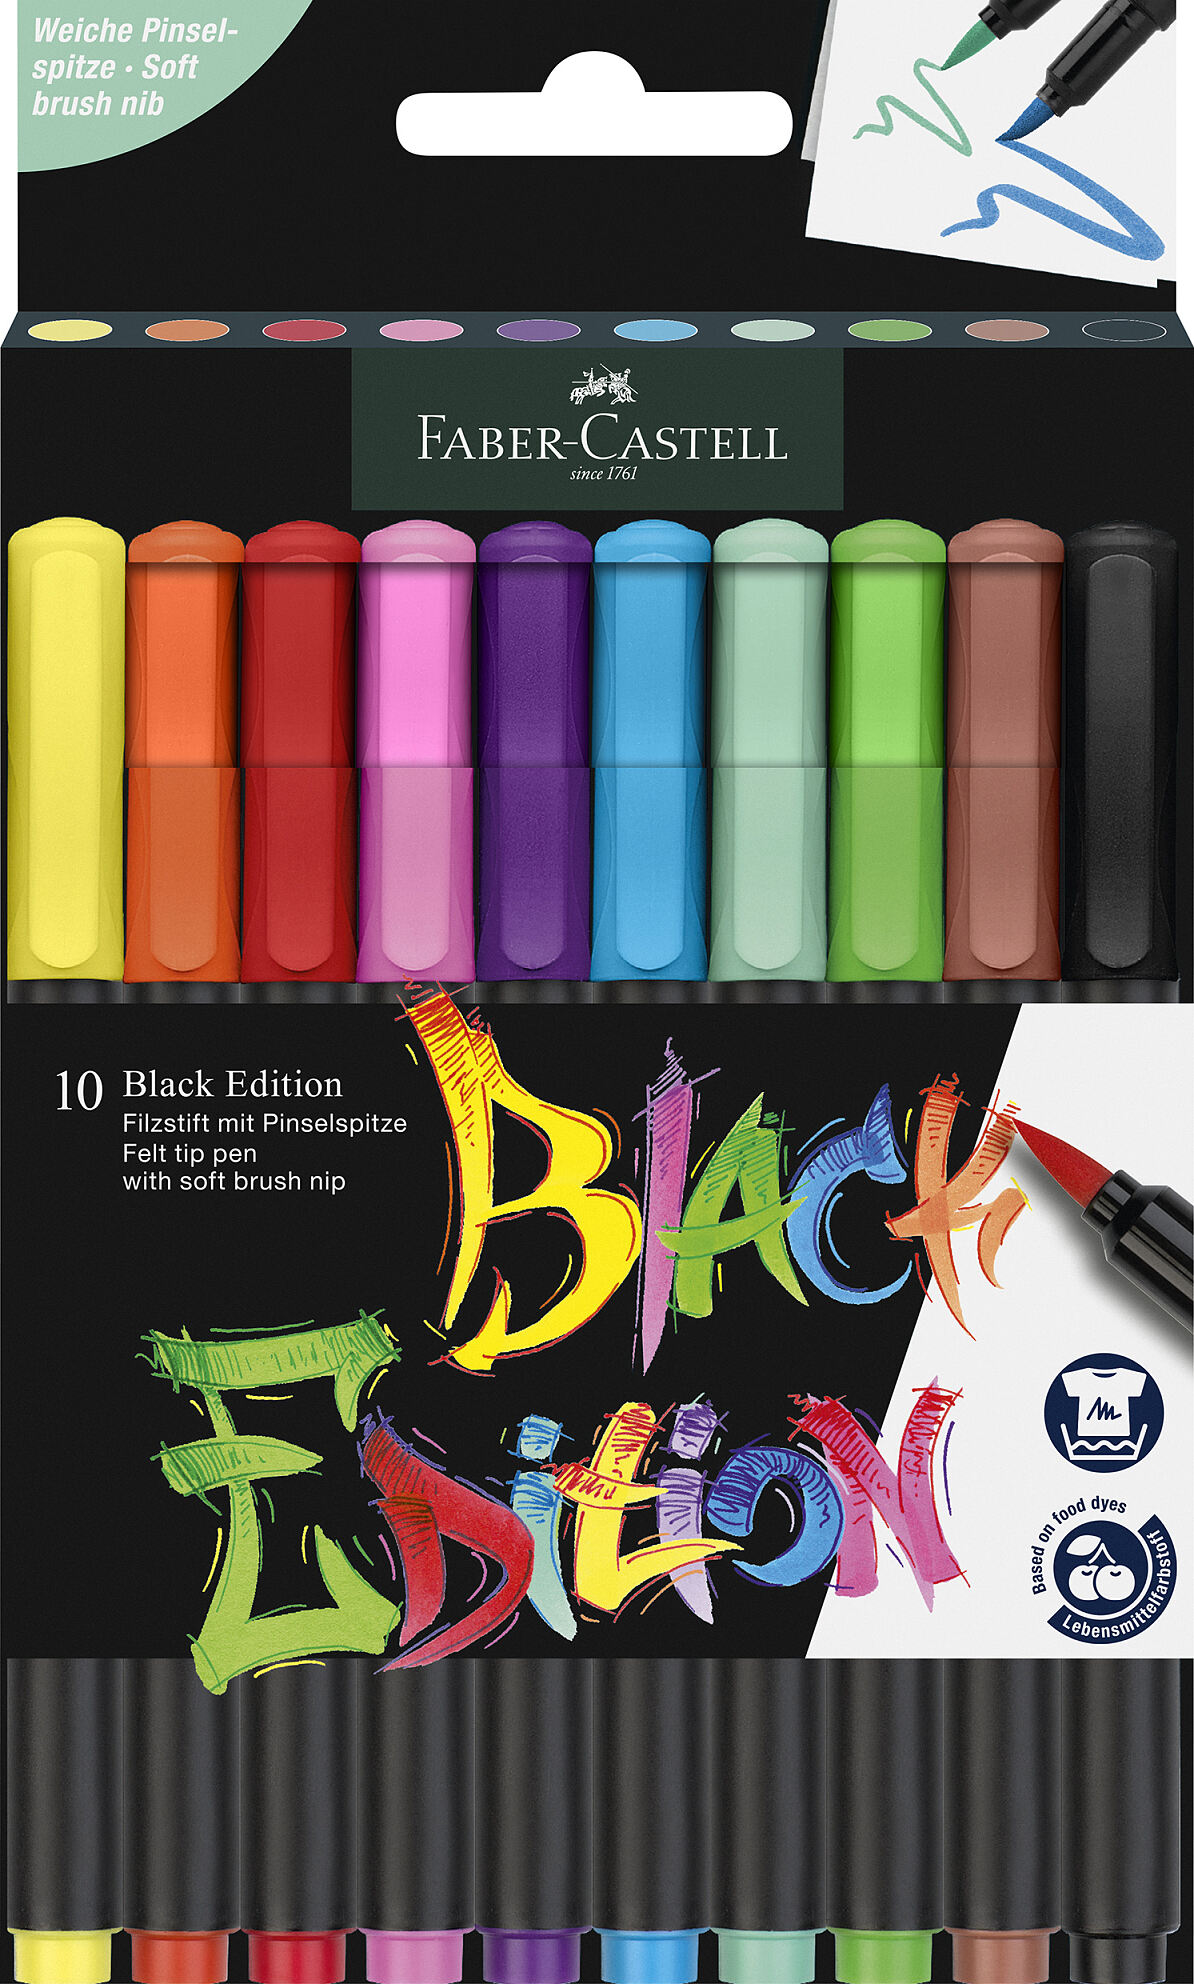 Faber-Castell_Brush pen Black Edition, cardboard box of 10_EUR 9,50 (1)